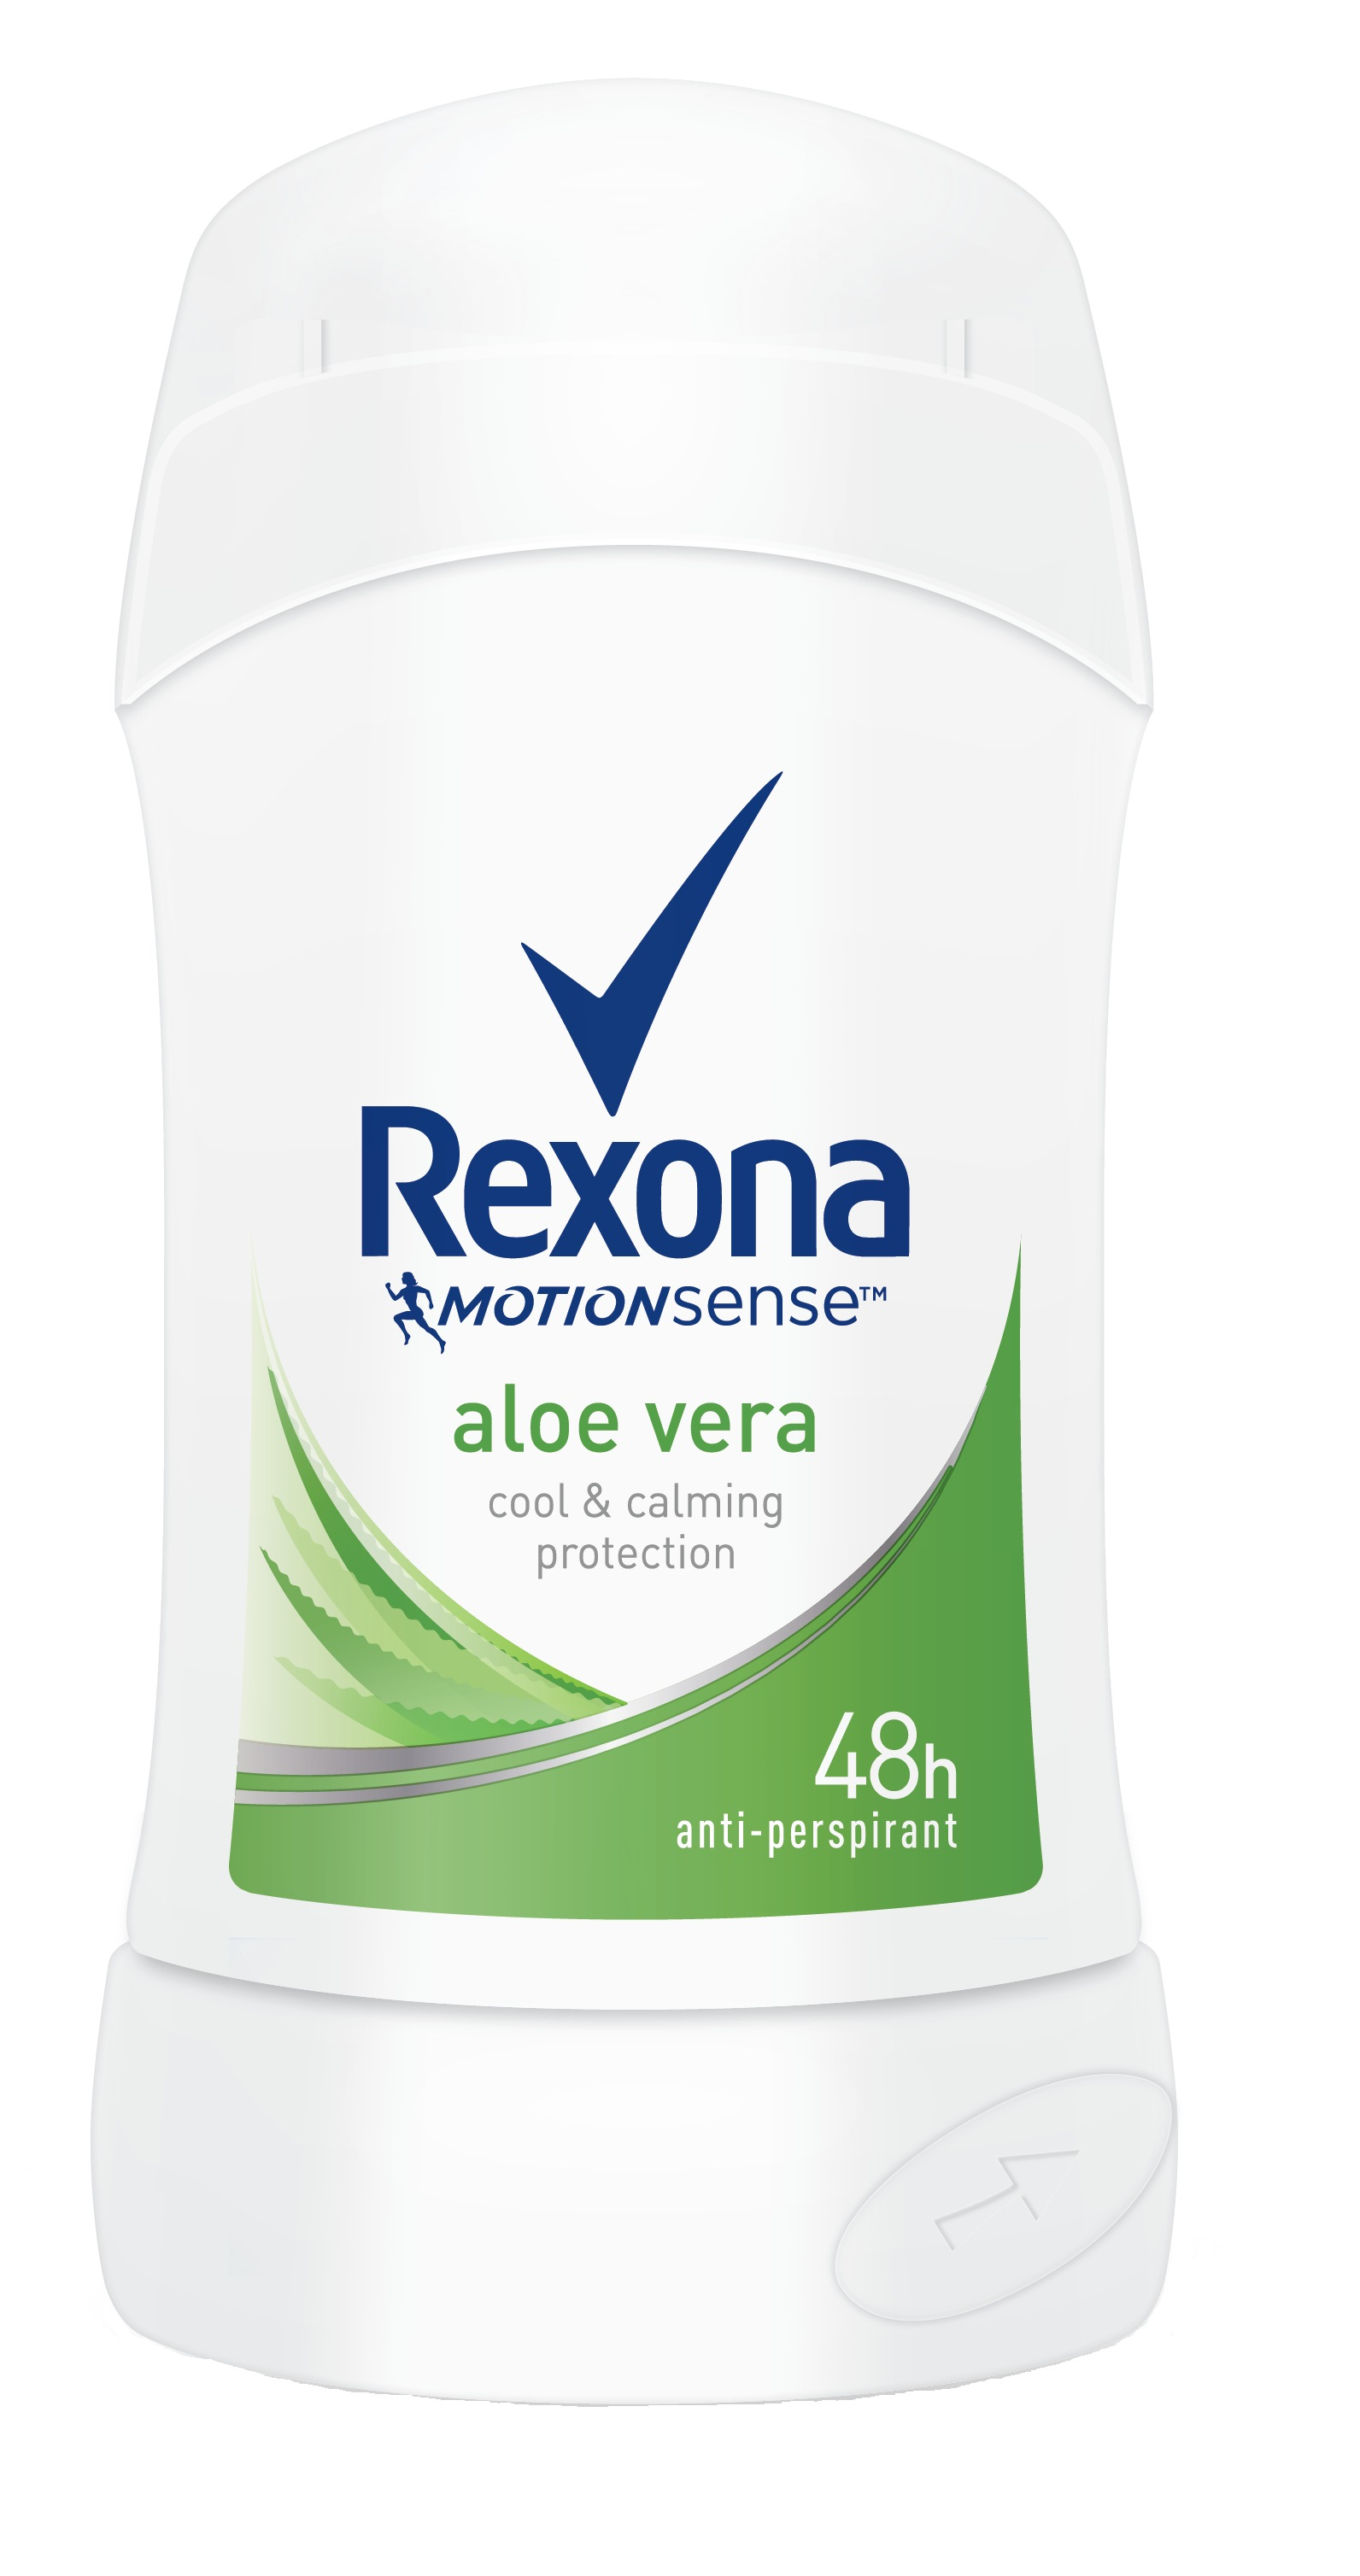 Rexona Aloe Vera deo stick 40ml